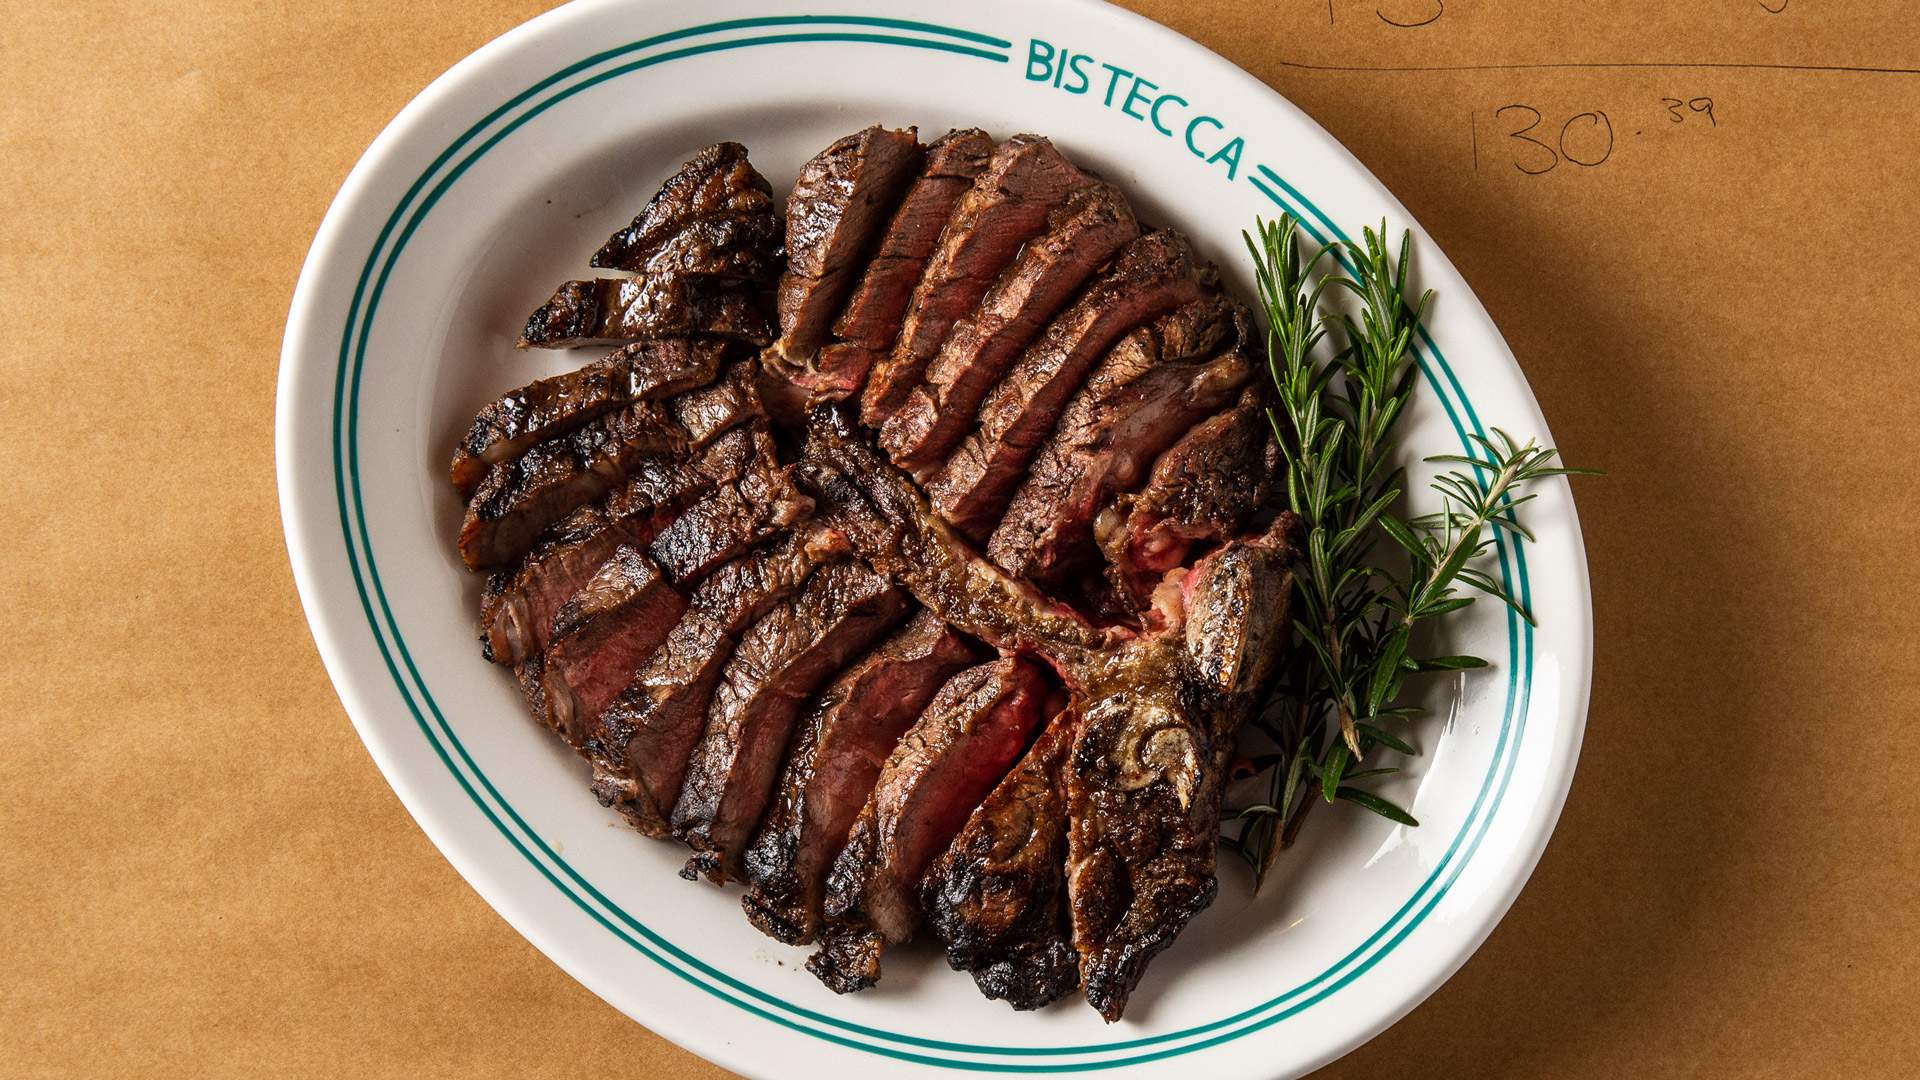 the bistecca alla Fiorentine at Bistecca - one of the best steaks in sydney